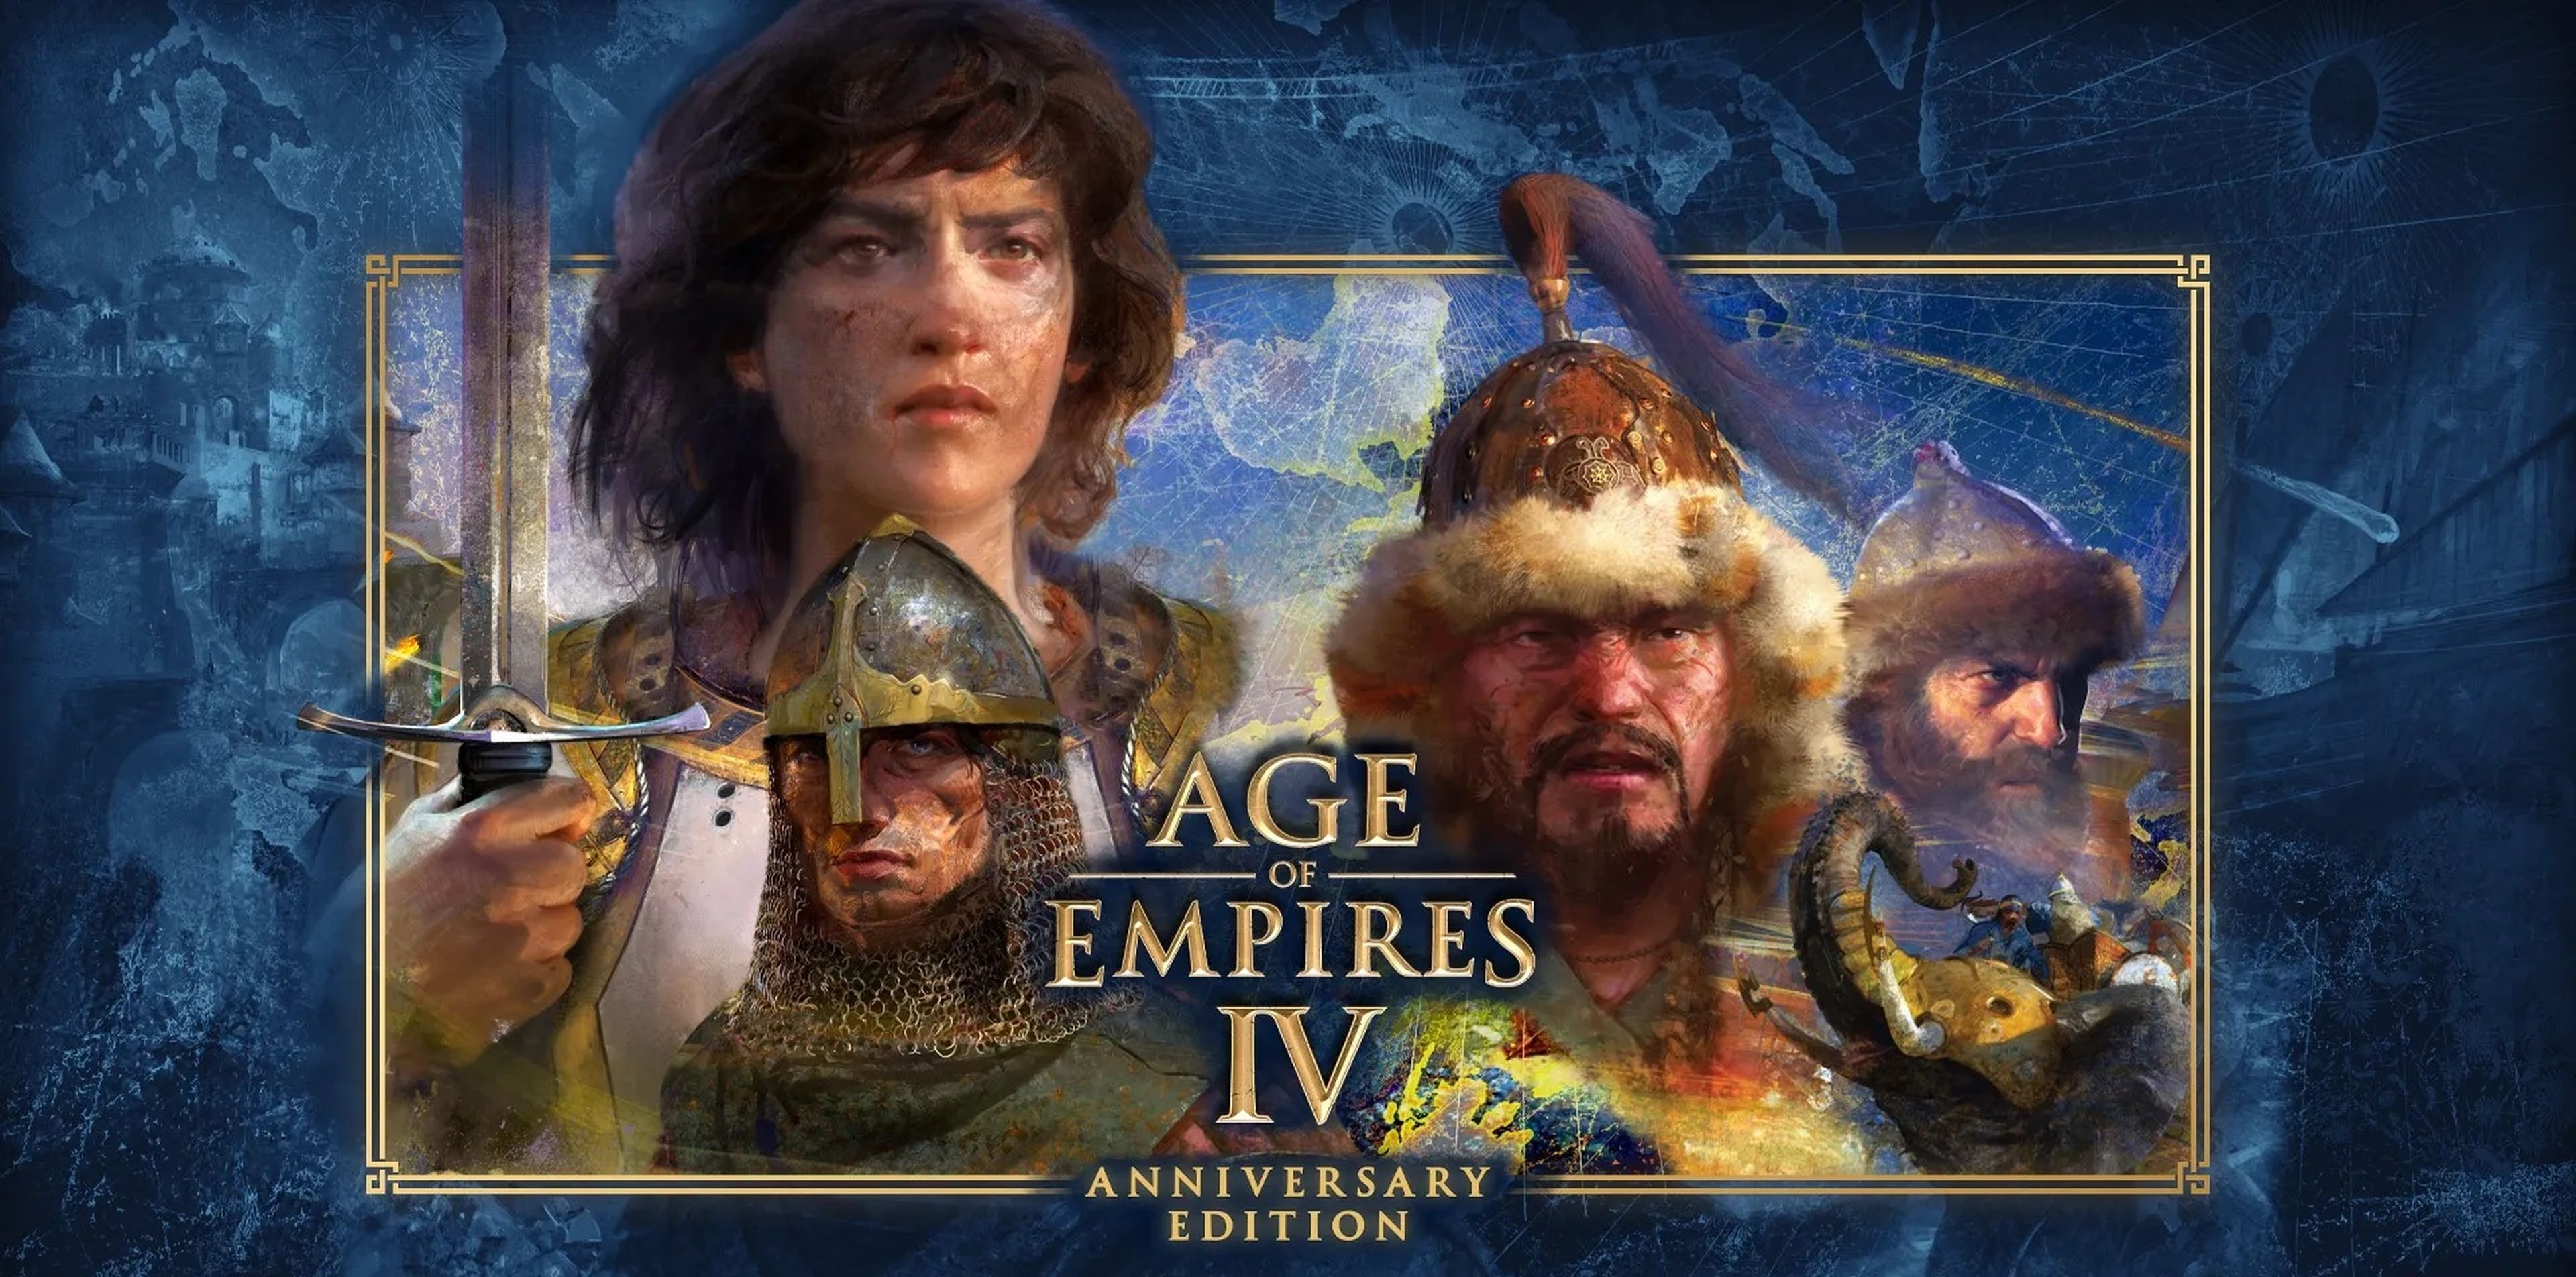 Impresiones Age of Empires IV Anniversary Edition